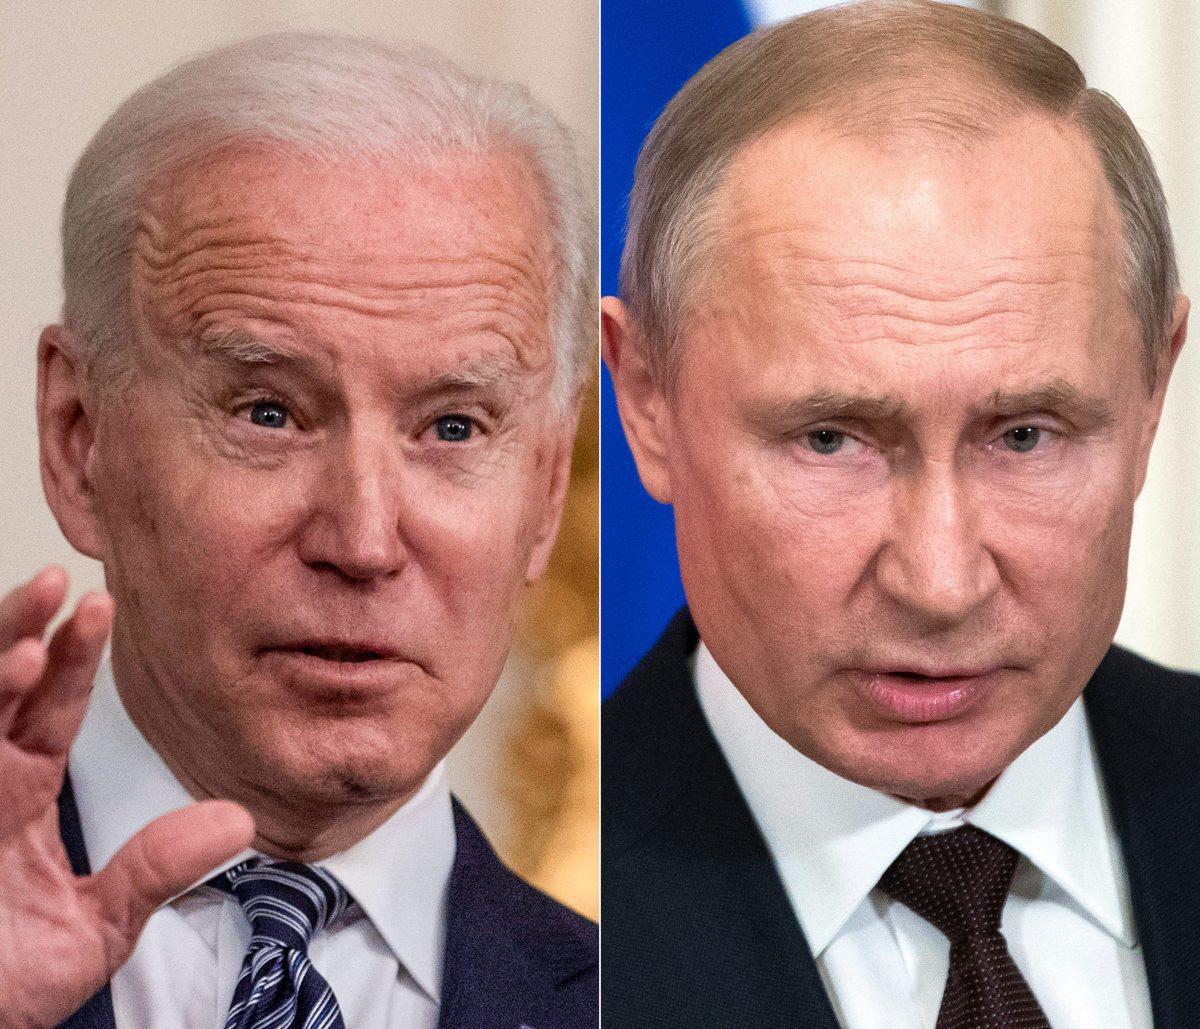 Rusos responden a Biden: Acusaciones sobre ciberataques son “delirantes”